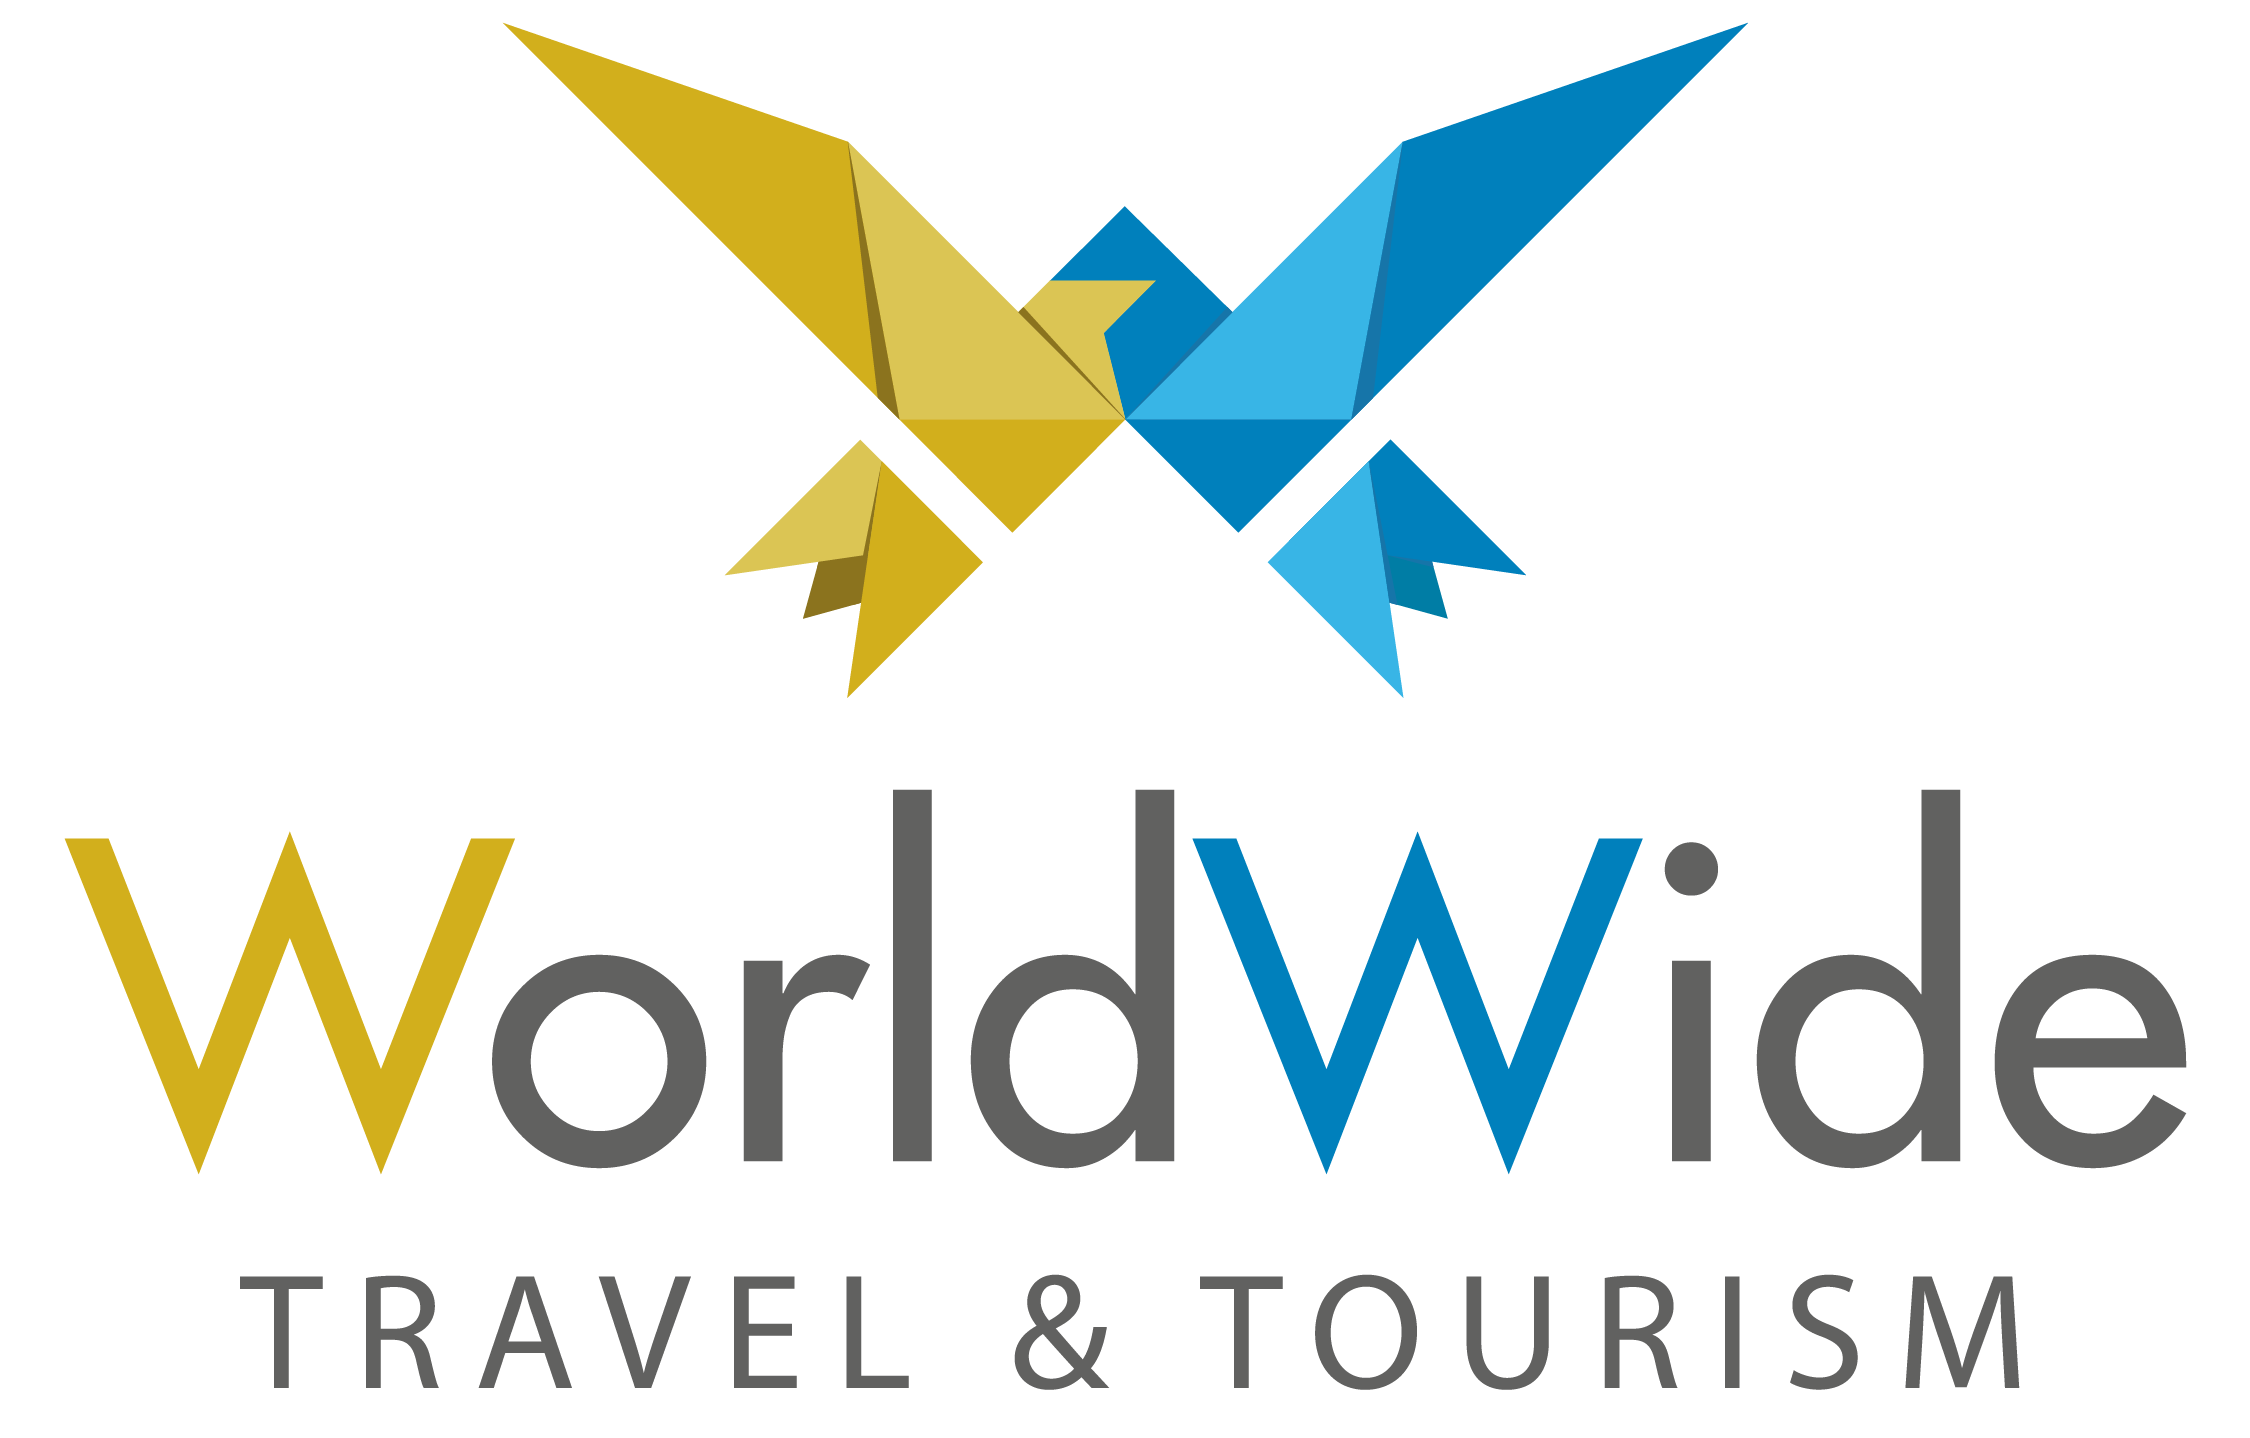 Worldwide Travel & Tourism